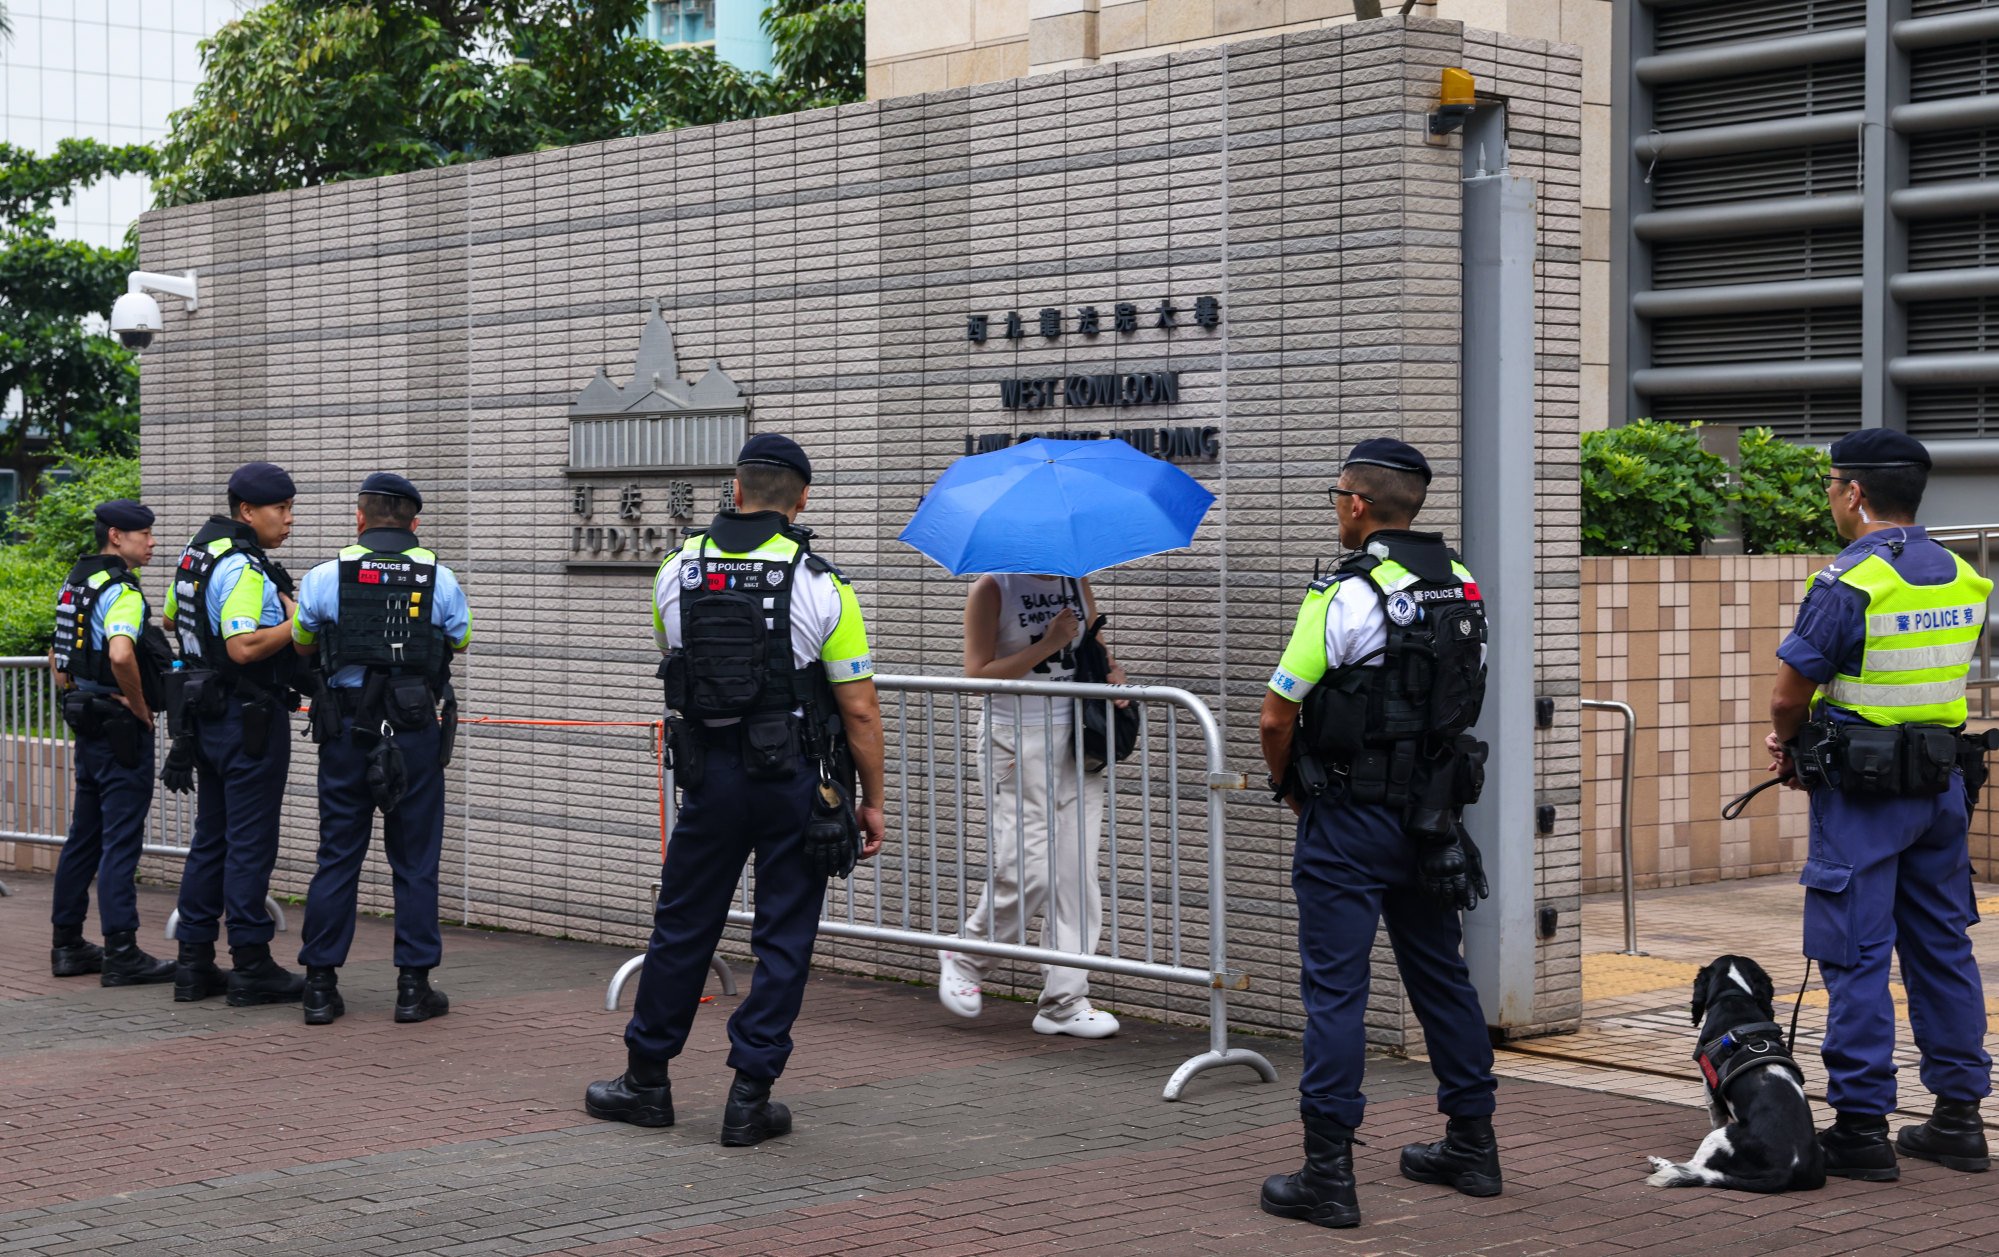 Hong Kong 47: activista dice que está "entusiasmado" por servir al país en su pedido de clemencia